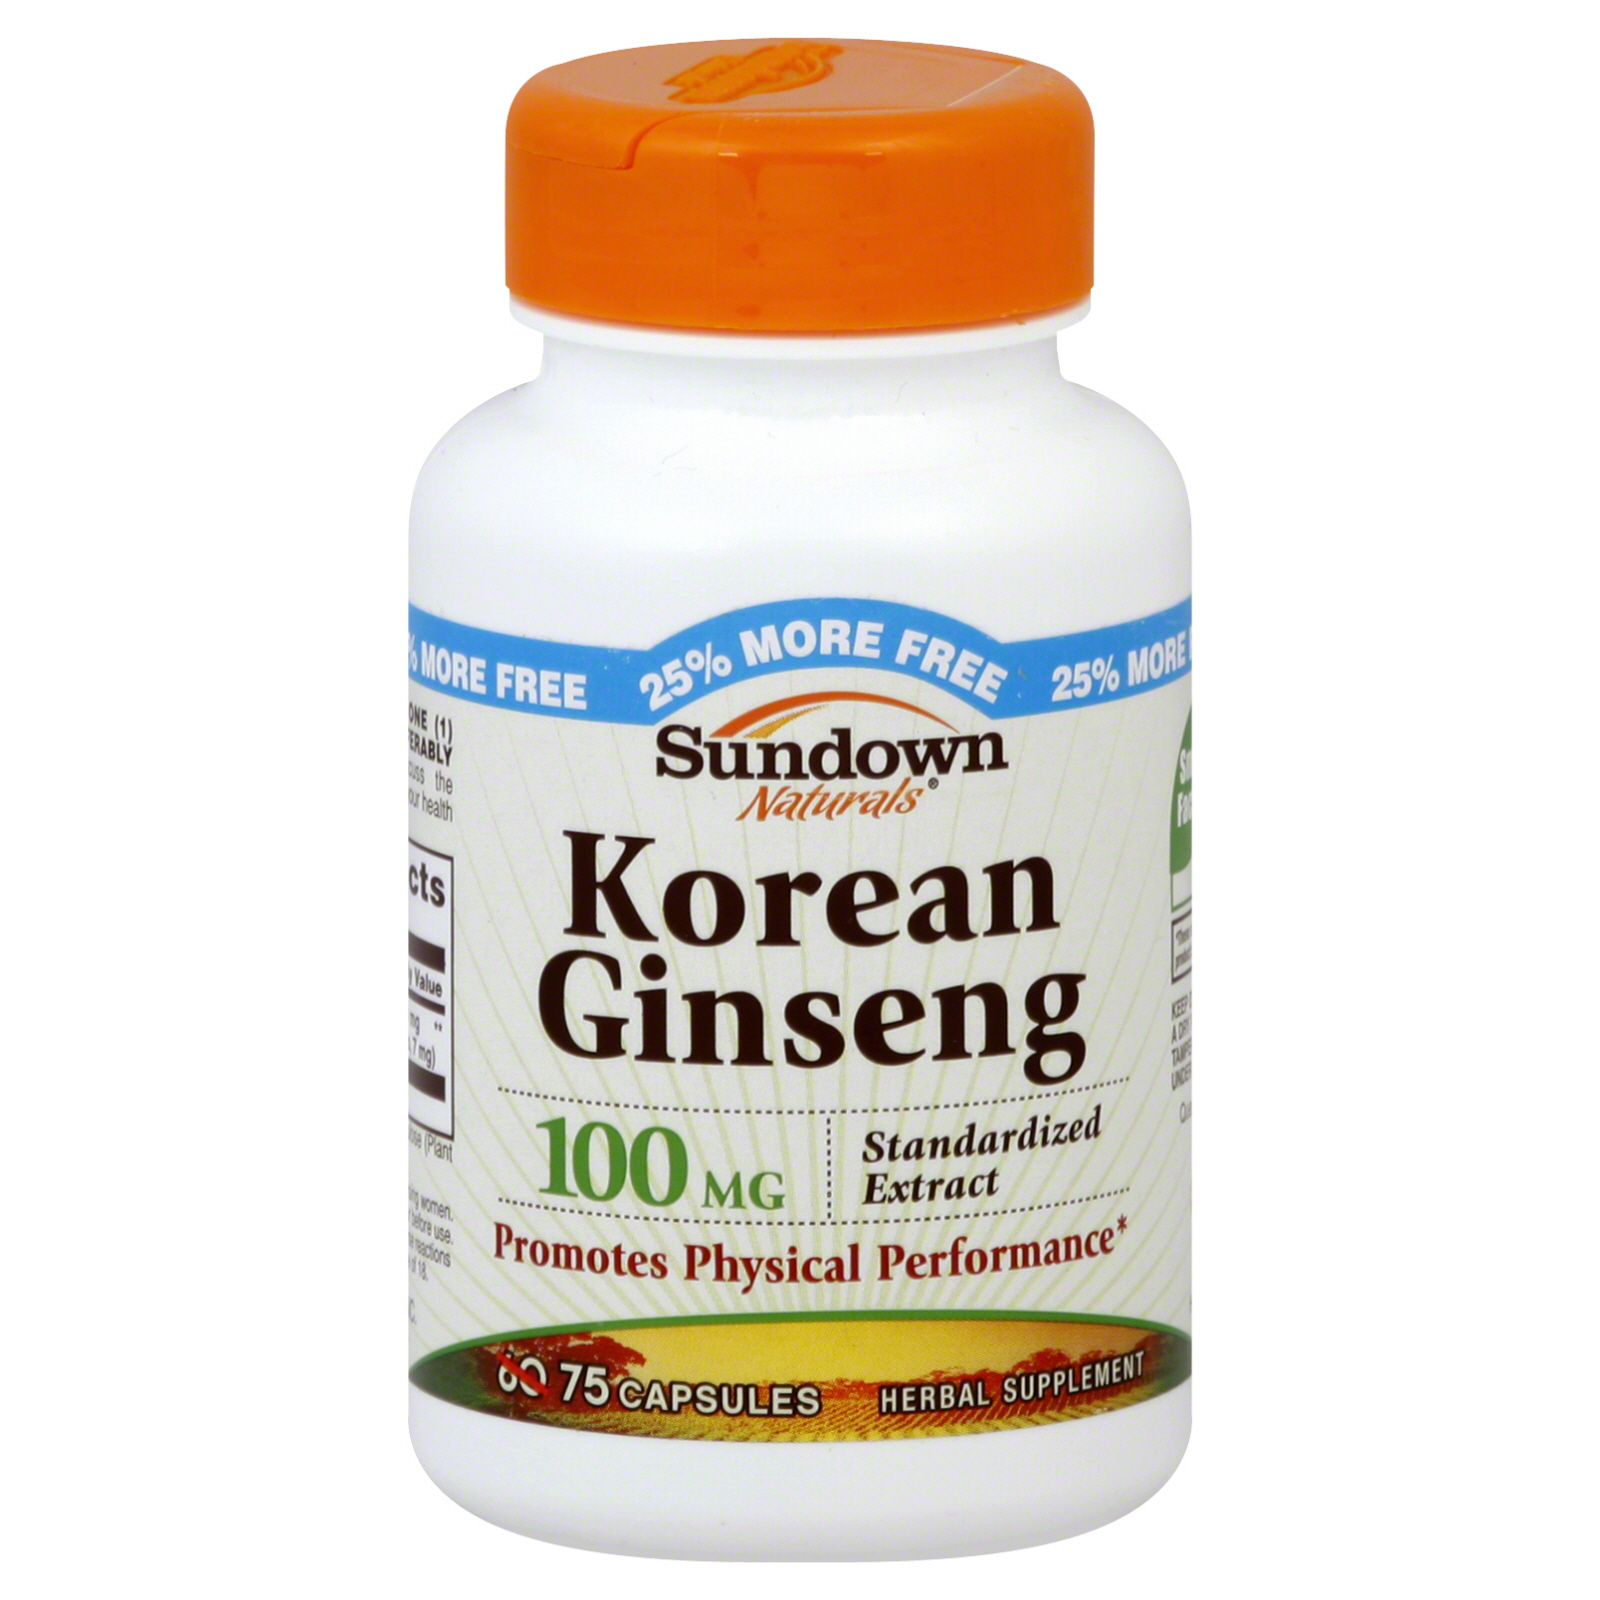 Sundown Naturals Korean Ginseng, 100 mg, Capsules, 75 capsules